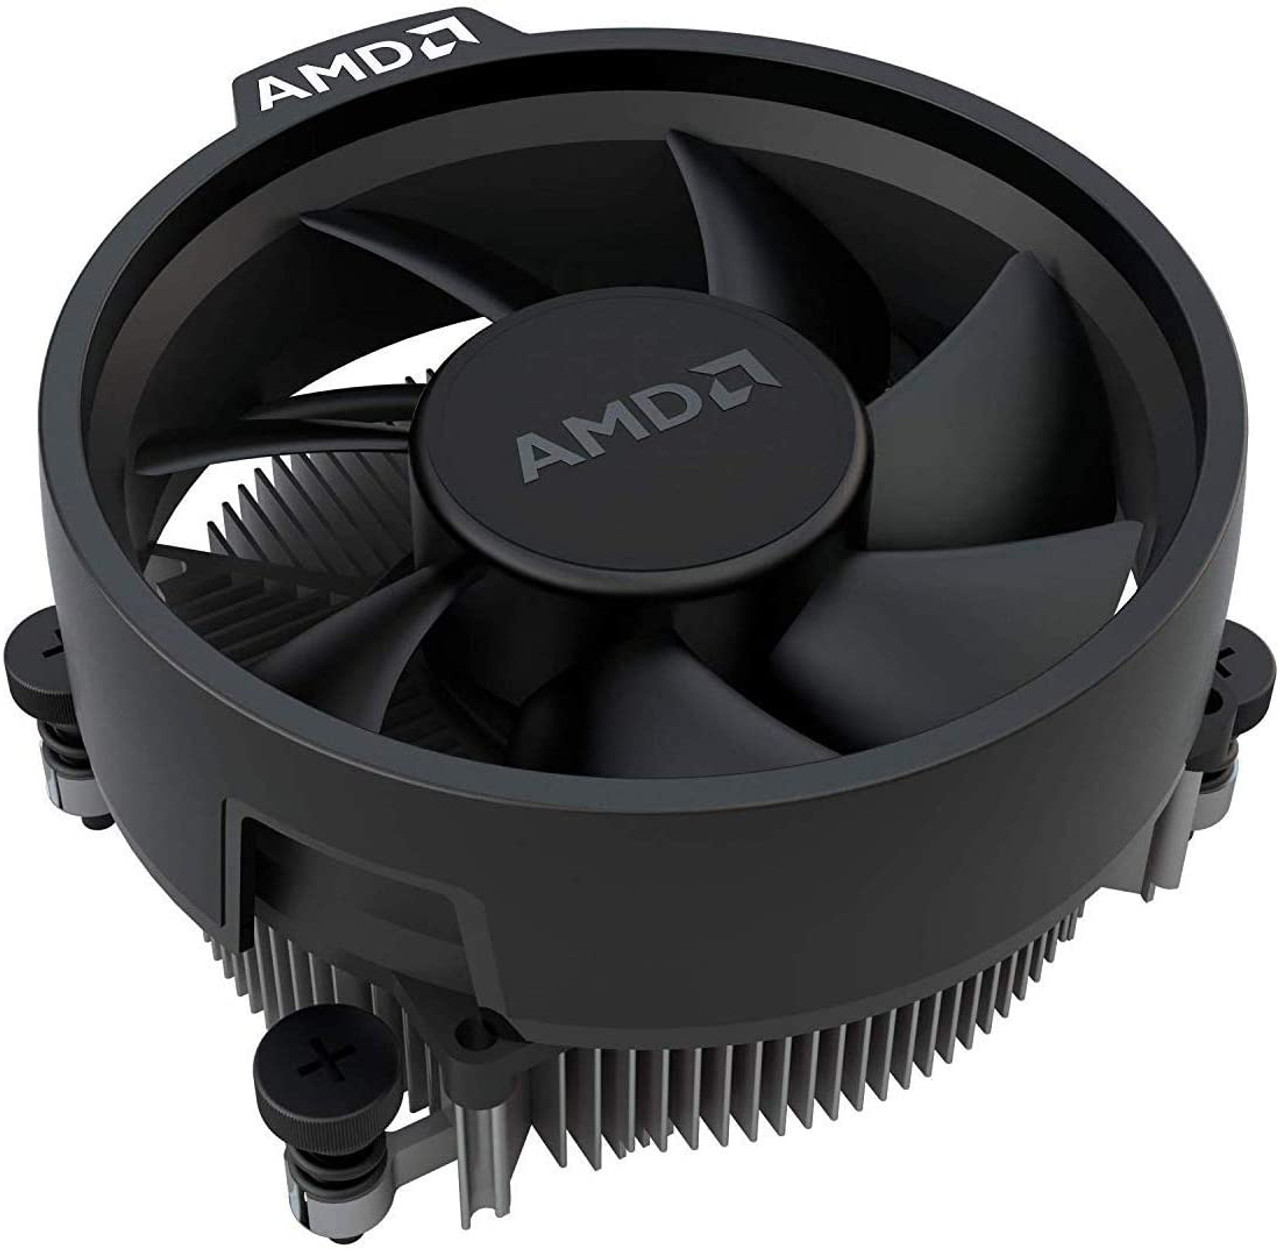 AMD Ryzen 5 3600 / Up to 4.2 GHz / 6 Cores 12 Threads / AM4 / Desktop  Processor